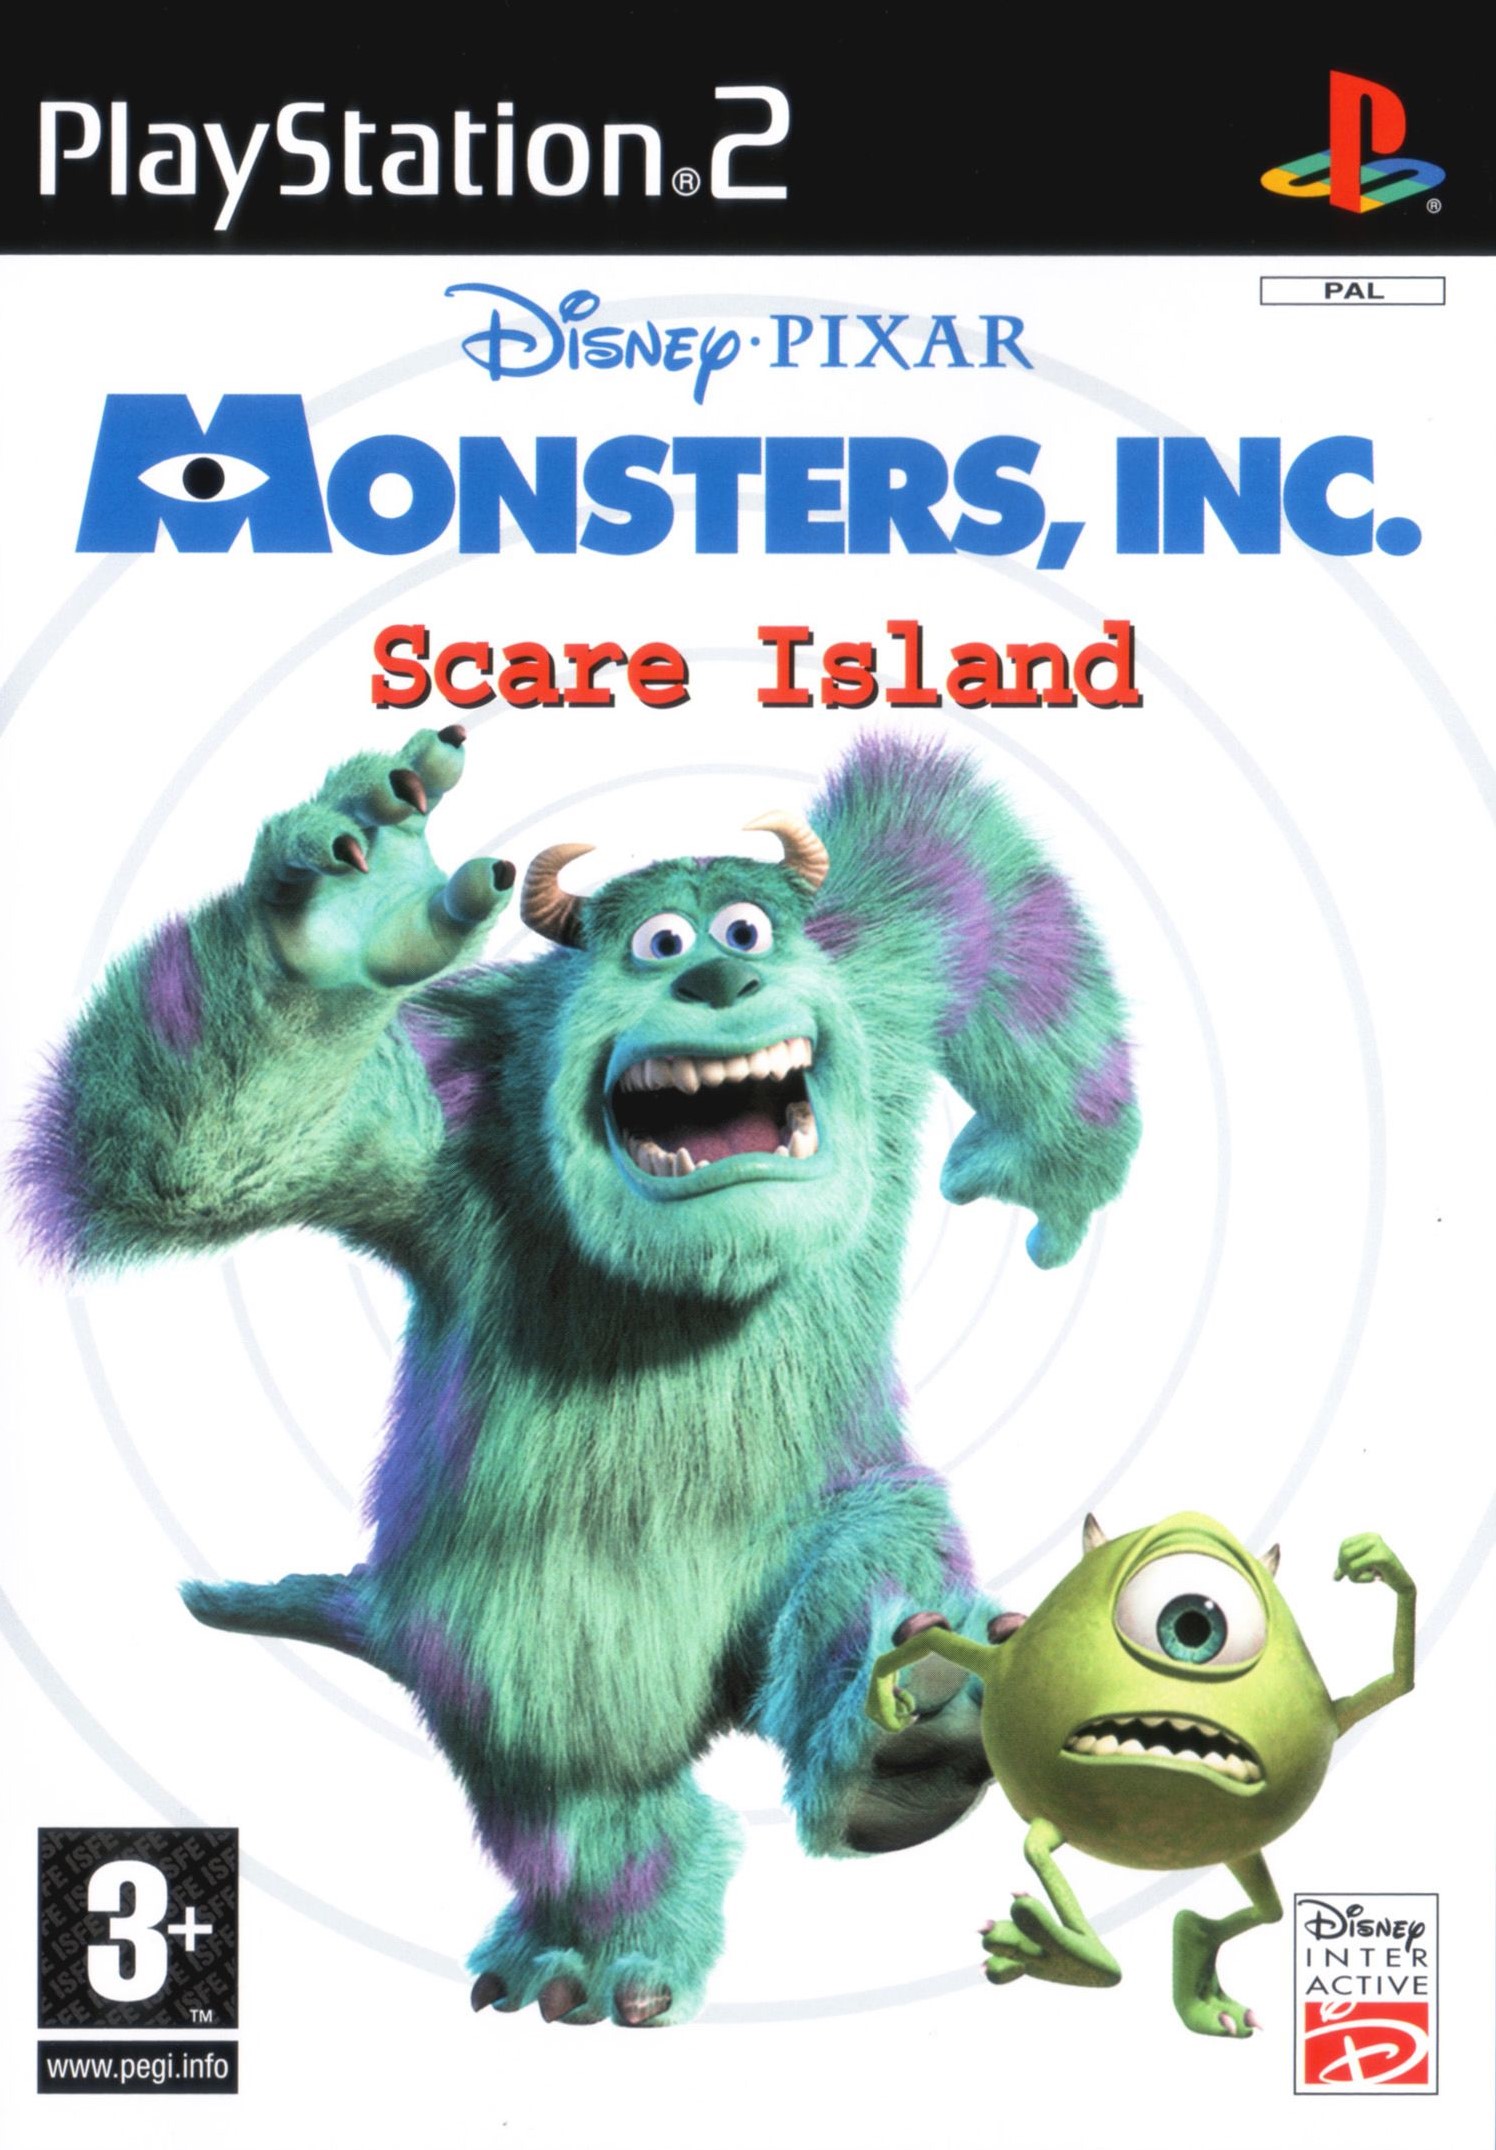 Disney Pixar Monsters Inc Scare Island - PlayStation 2 Játékok